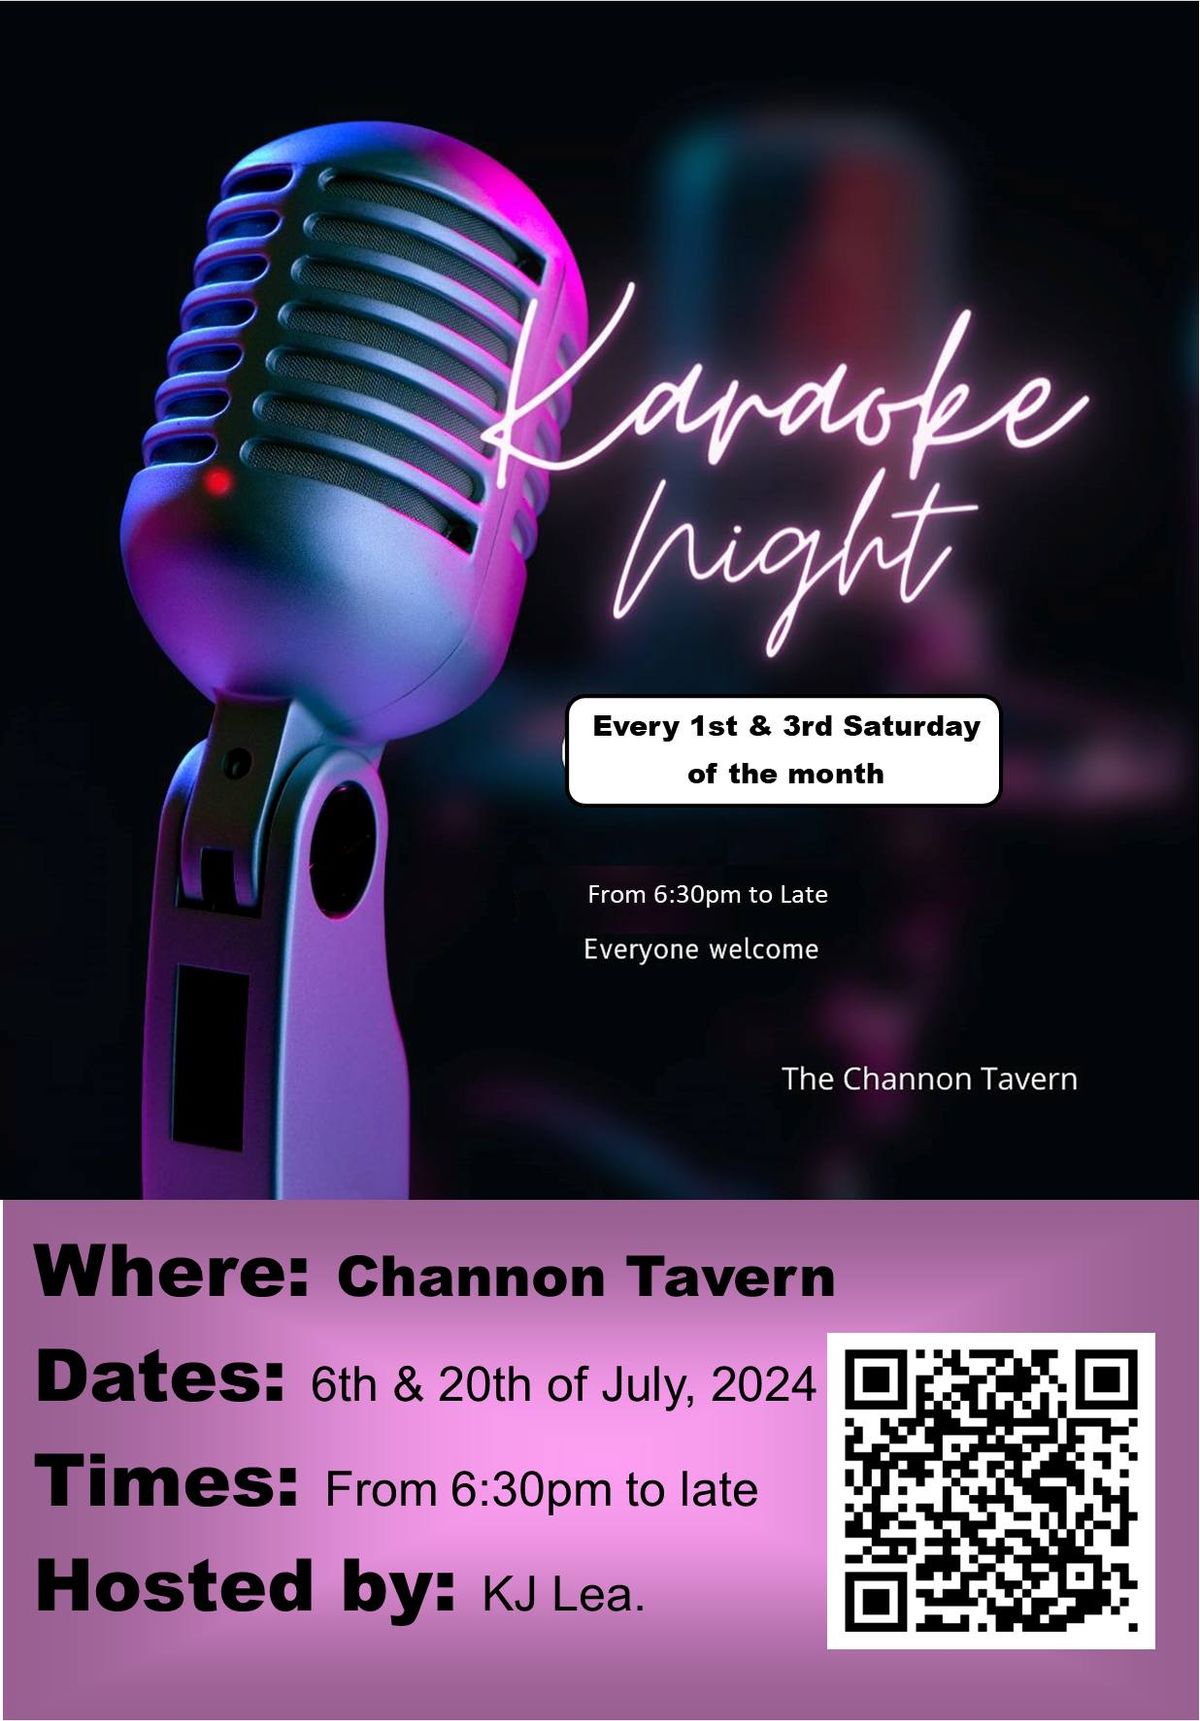 Karaoke Night at The Channon Tavern